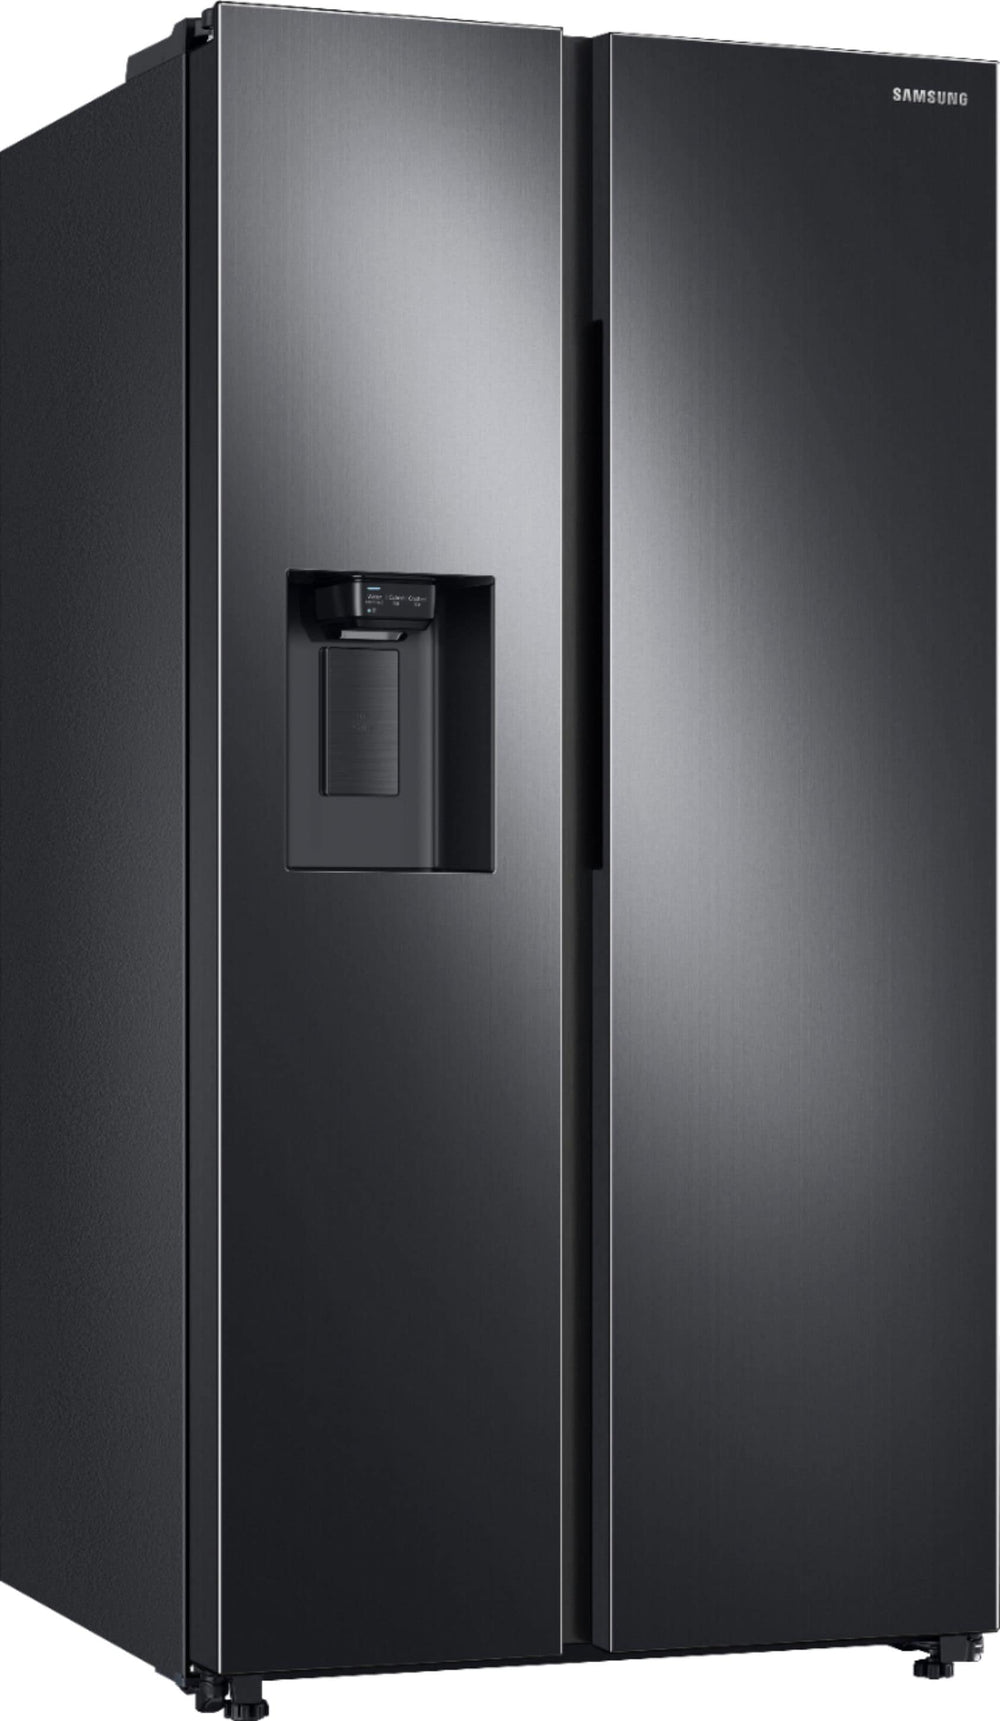 Samsung - 27.4 Cu. Ft. Side-by-Side Refrigerator - Black stainless steel_1